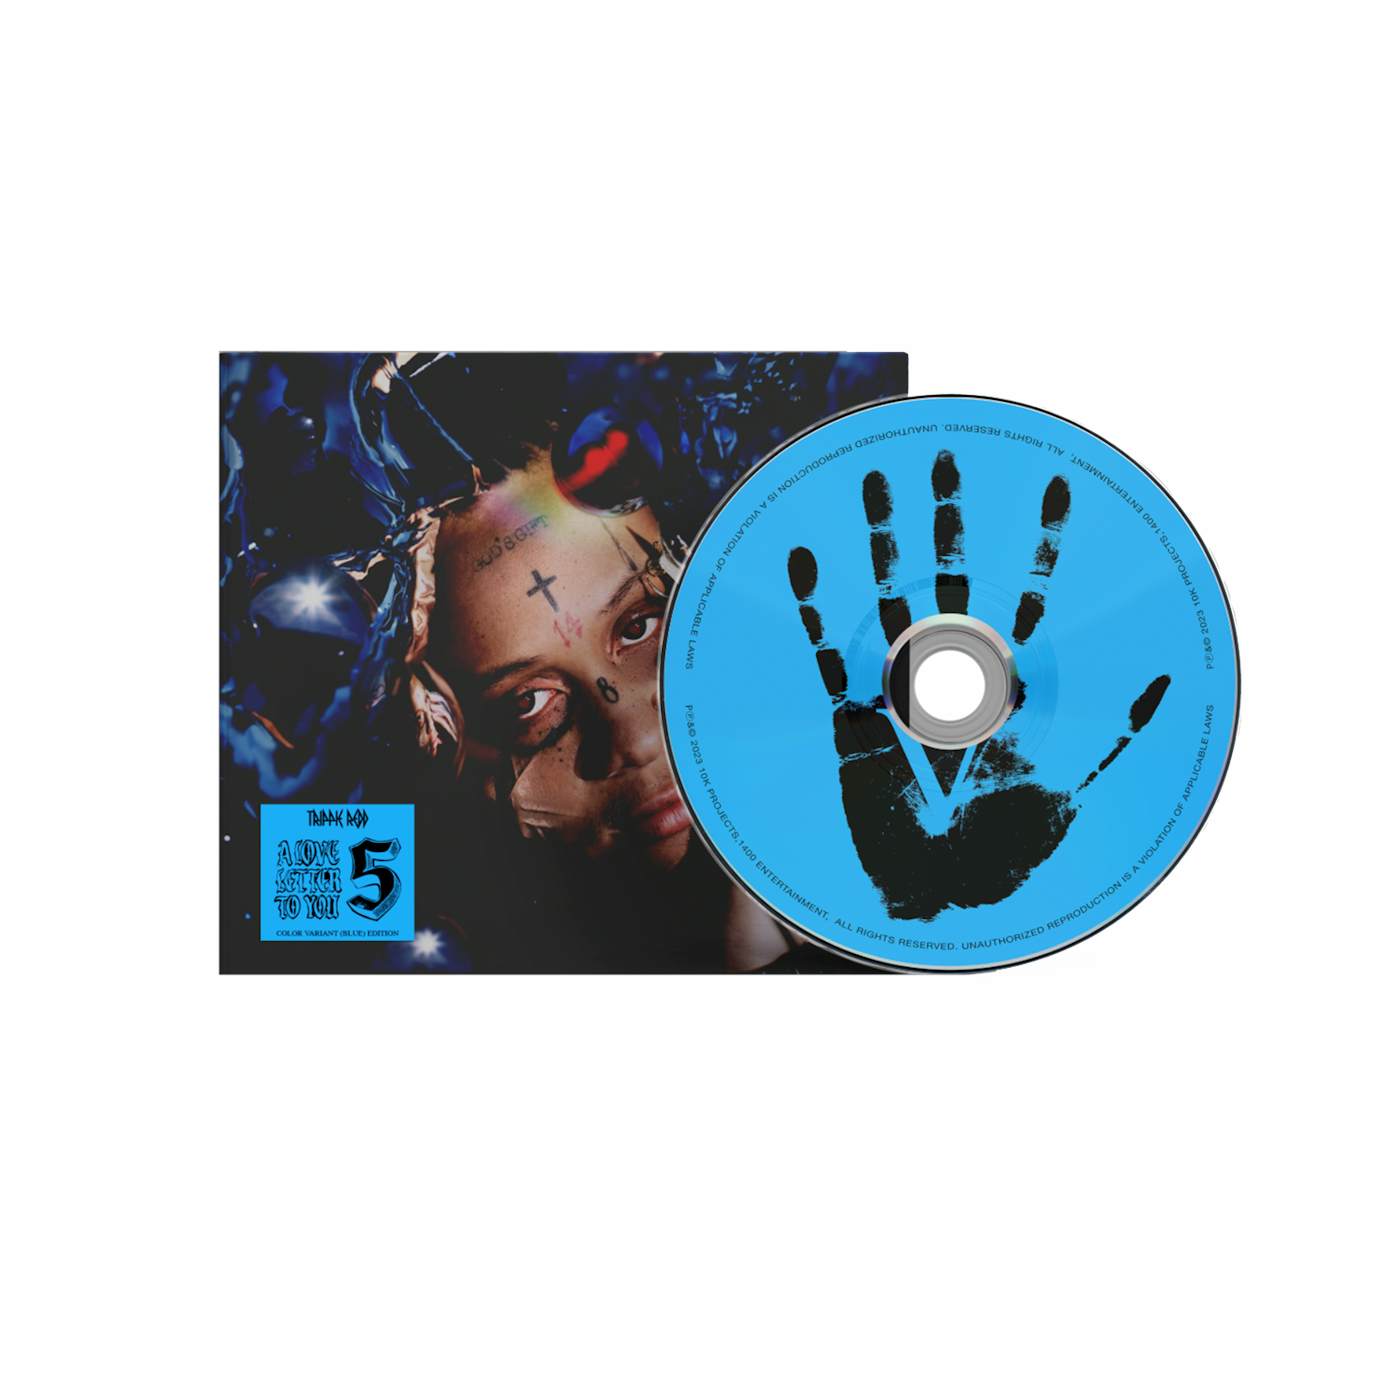 Trippie Redd ALLTY5 CD [LMTD EDITION BLUE VARIANT]